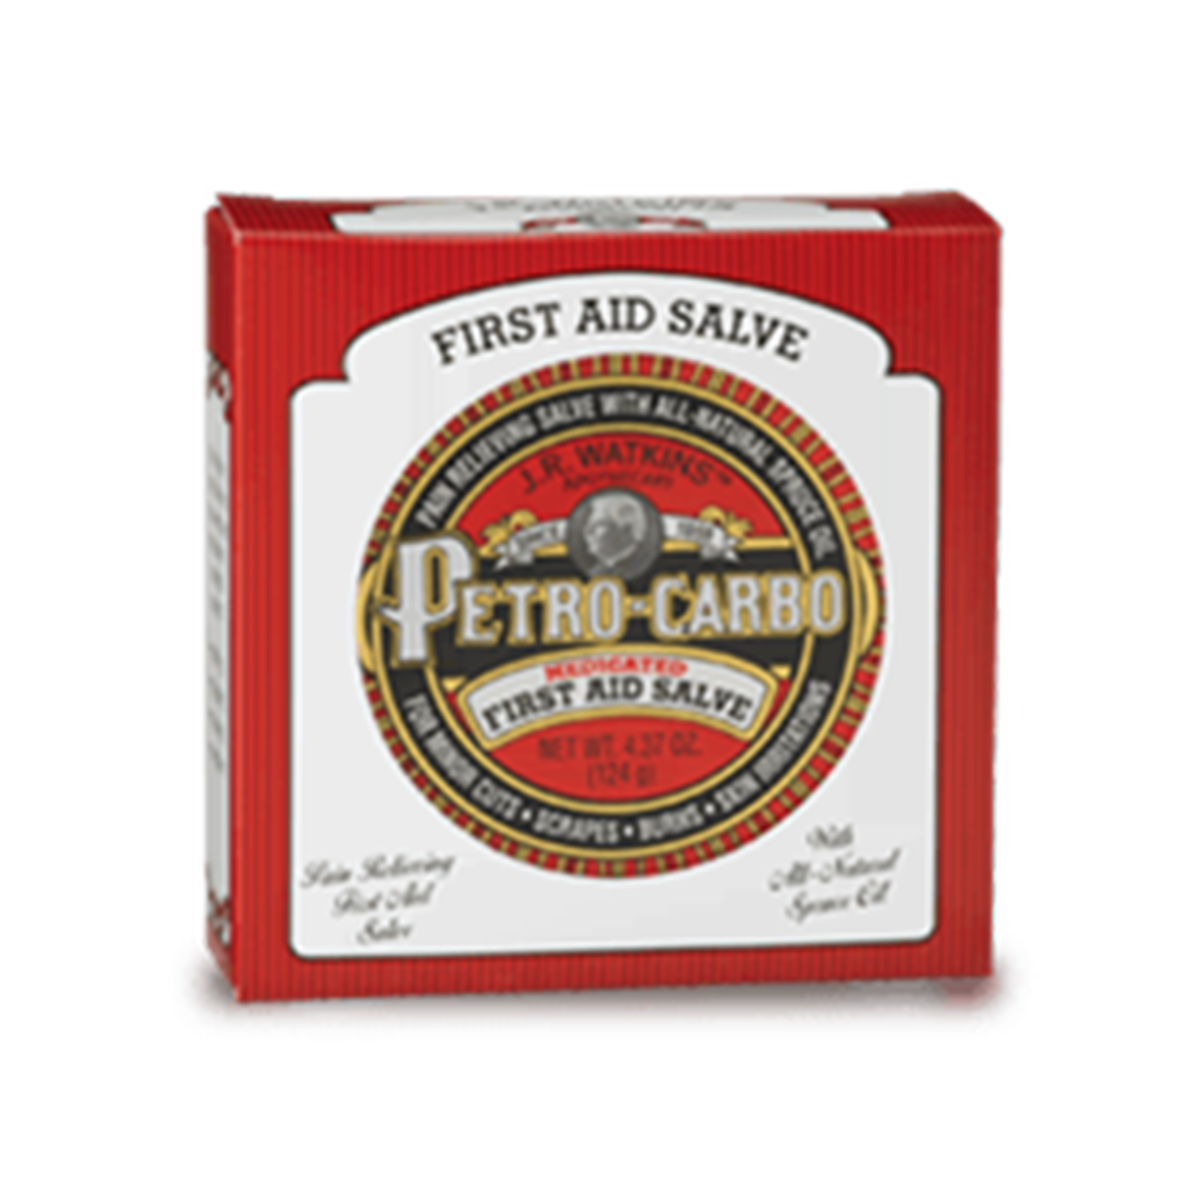 JR Watkins Petro-carbo first aid salve